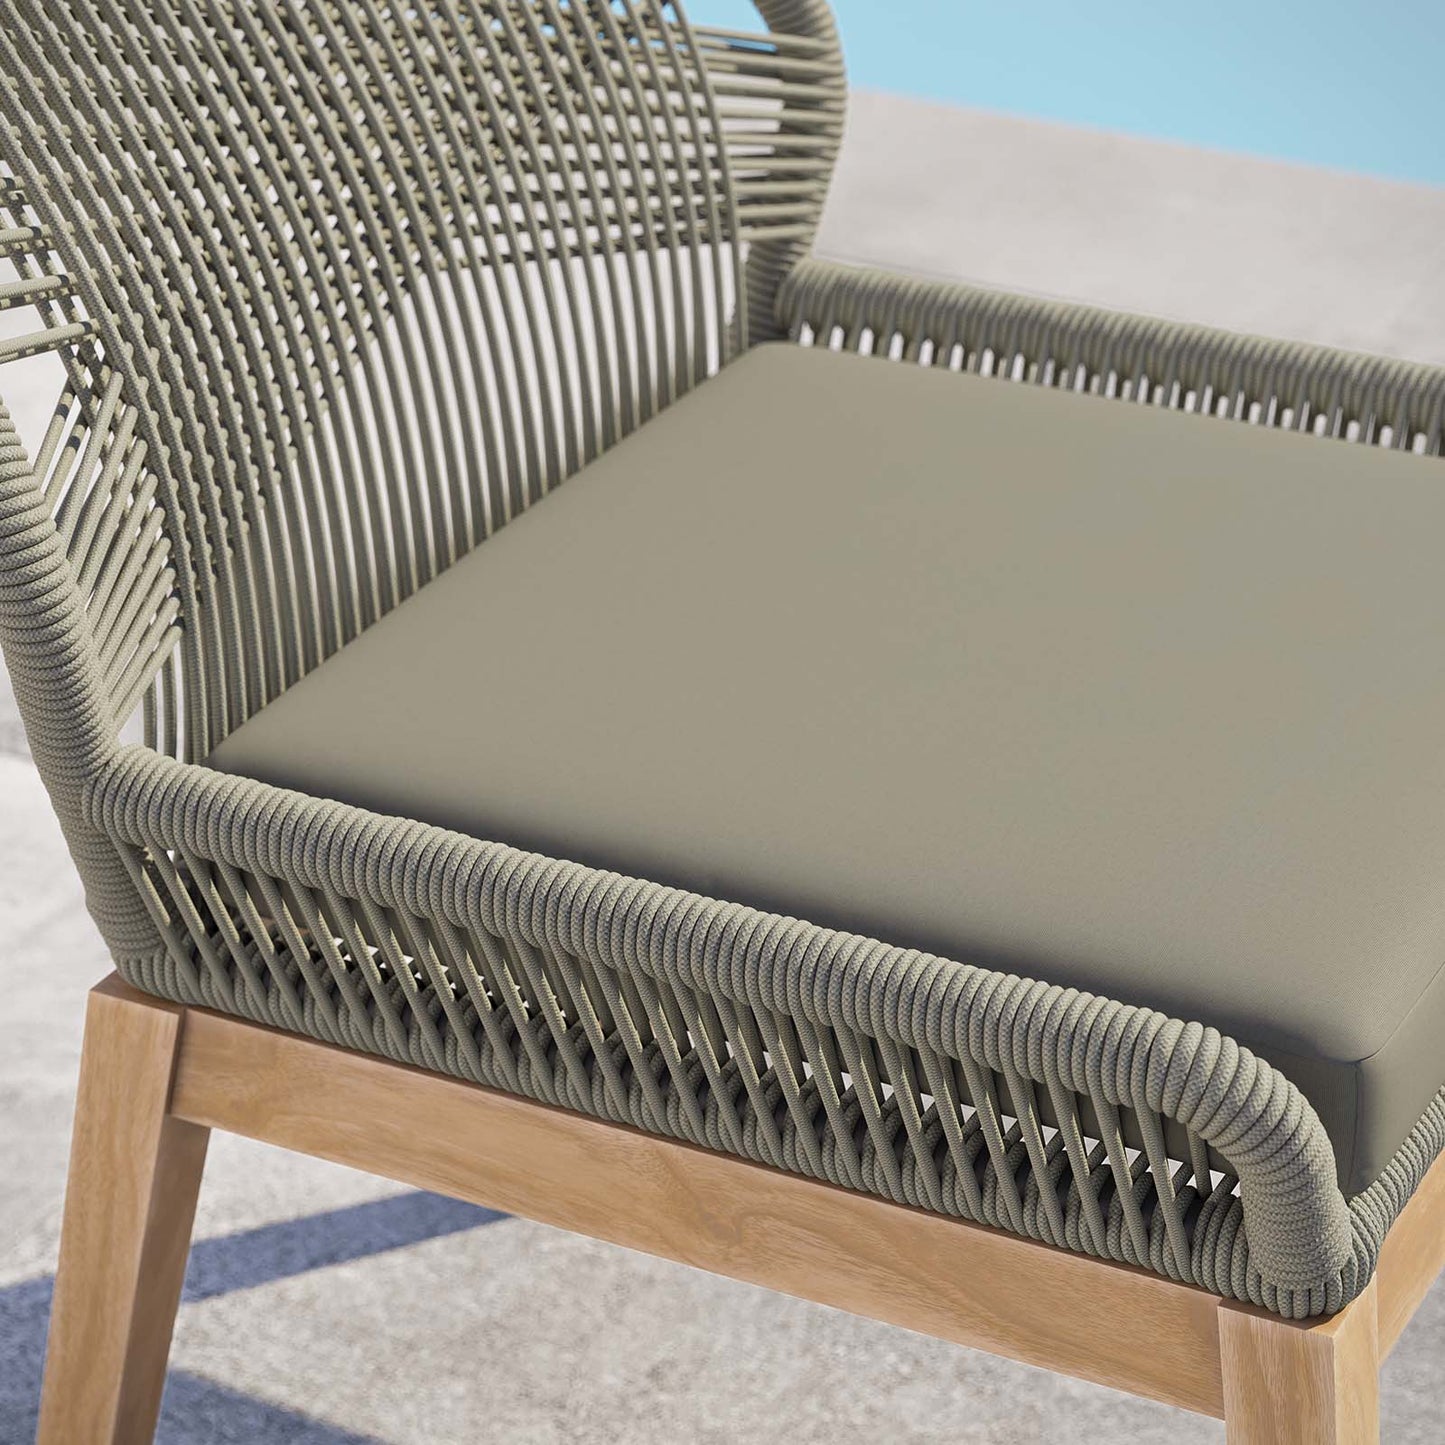 Wellspring Outdoor Patio Teak Wood Dining Chair Light Gray Greige EEI-5747-LGR-GRG